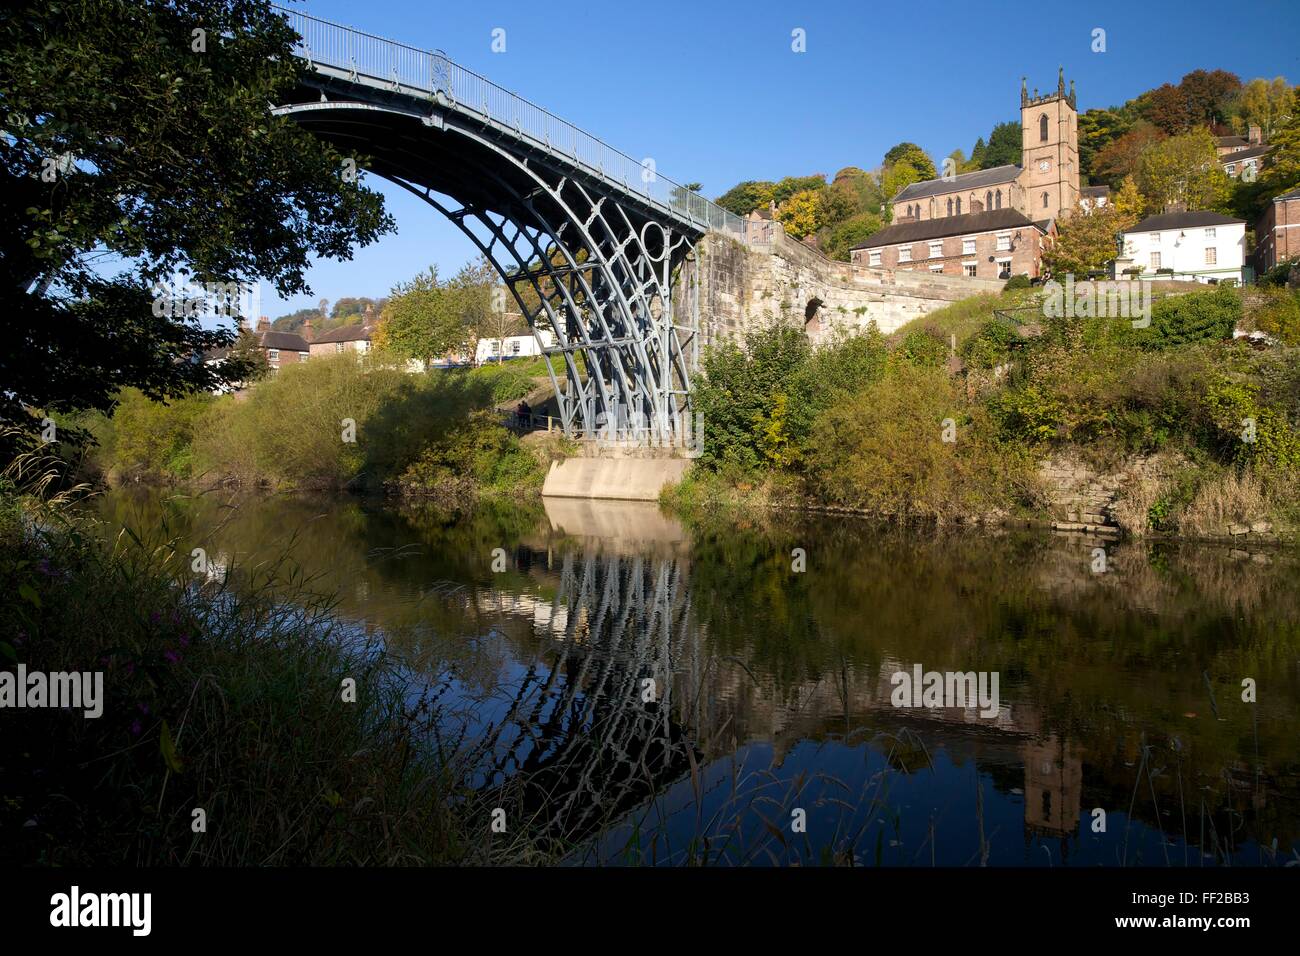 Worlds first iron bridge spans the banks of the River Severn in autumn sunshine, Ironbridge, UNESCO, Shropshire, England, UK Stock Photo